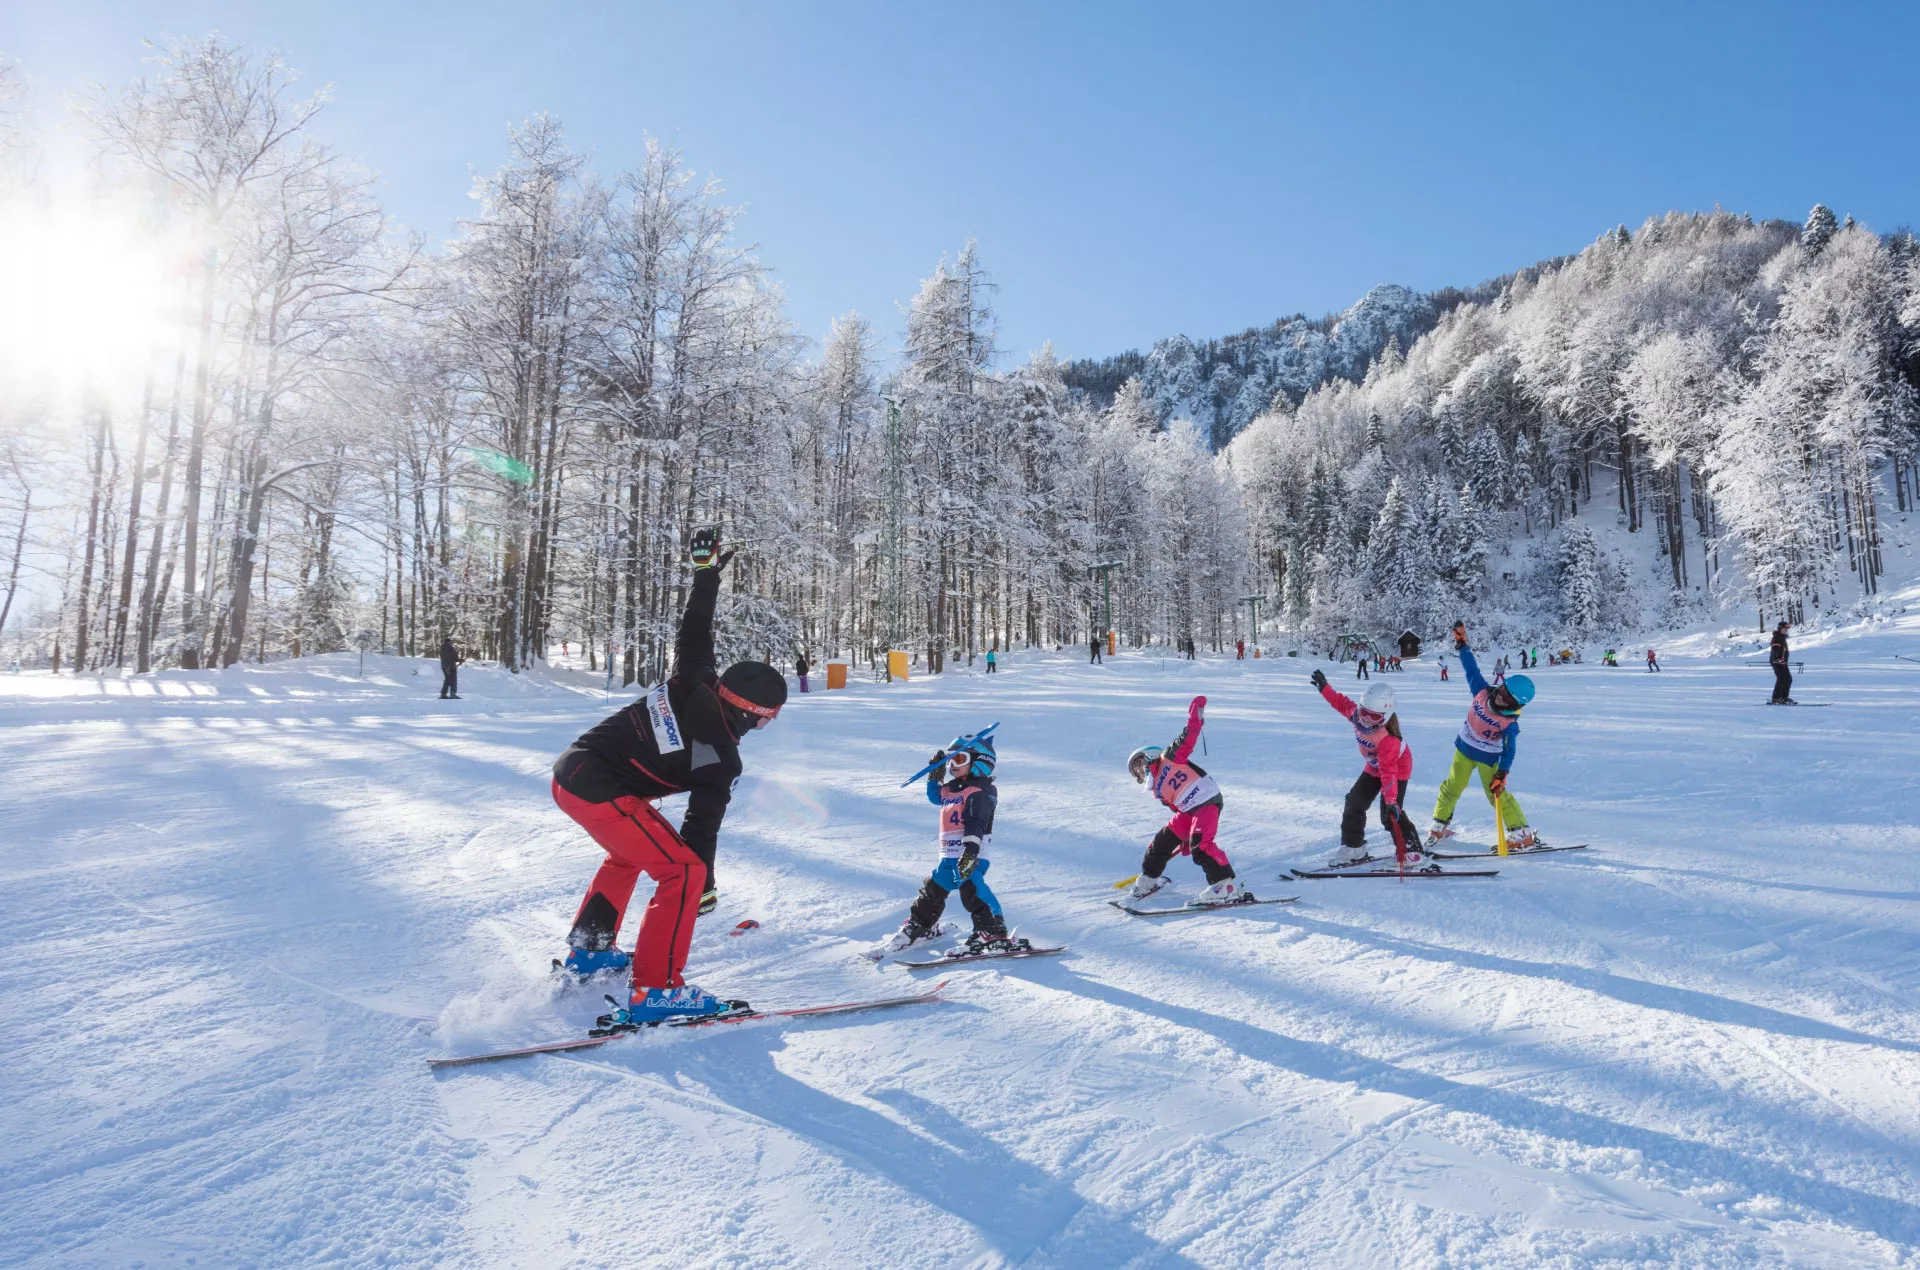 SkiSchool.si Kranjska Gora in Slovenia, Europe | Snowboarding,Skiing - Rated 0.8